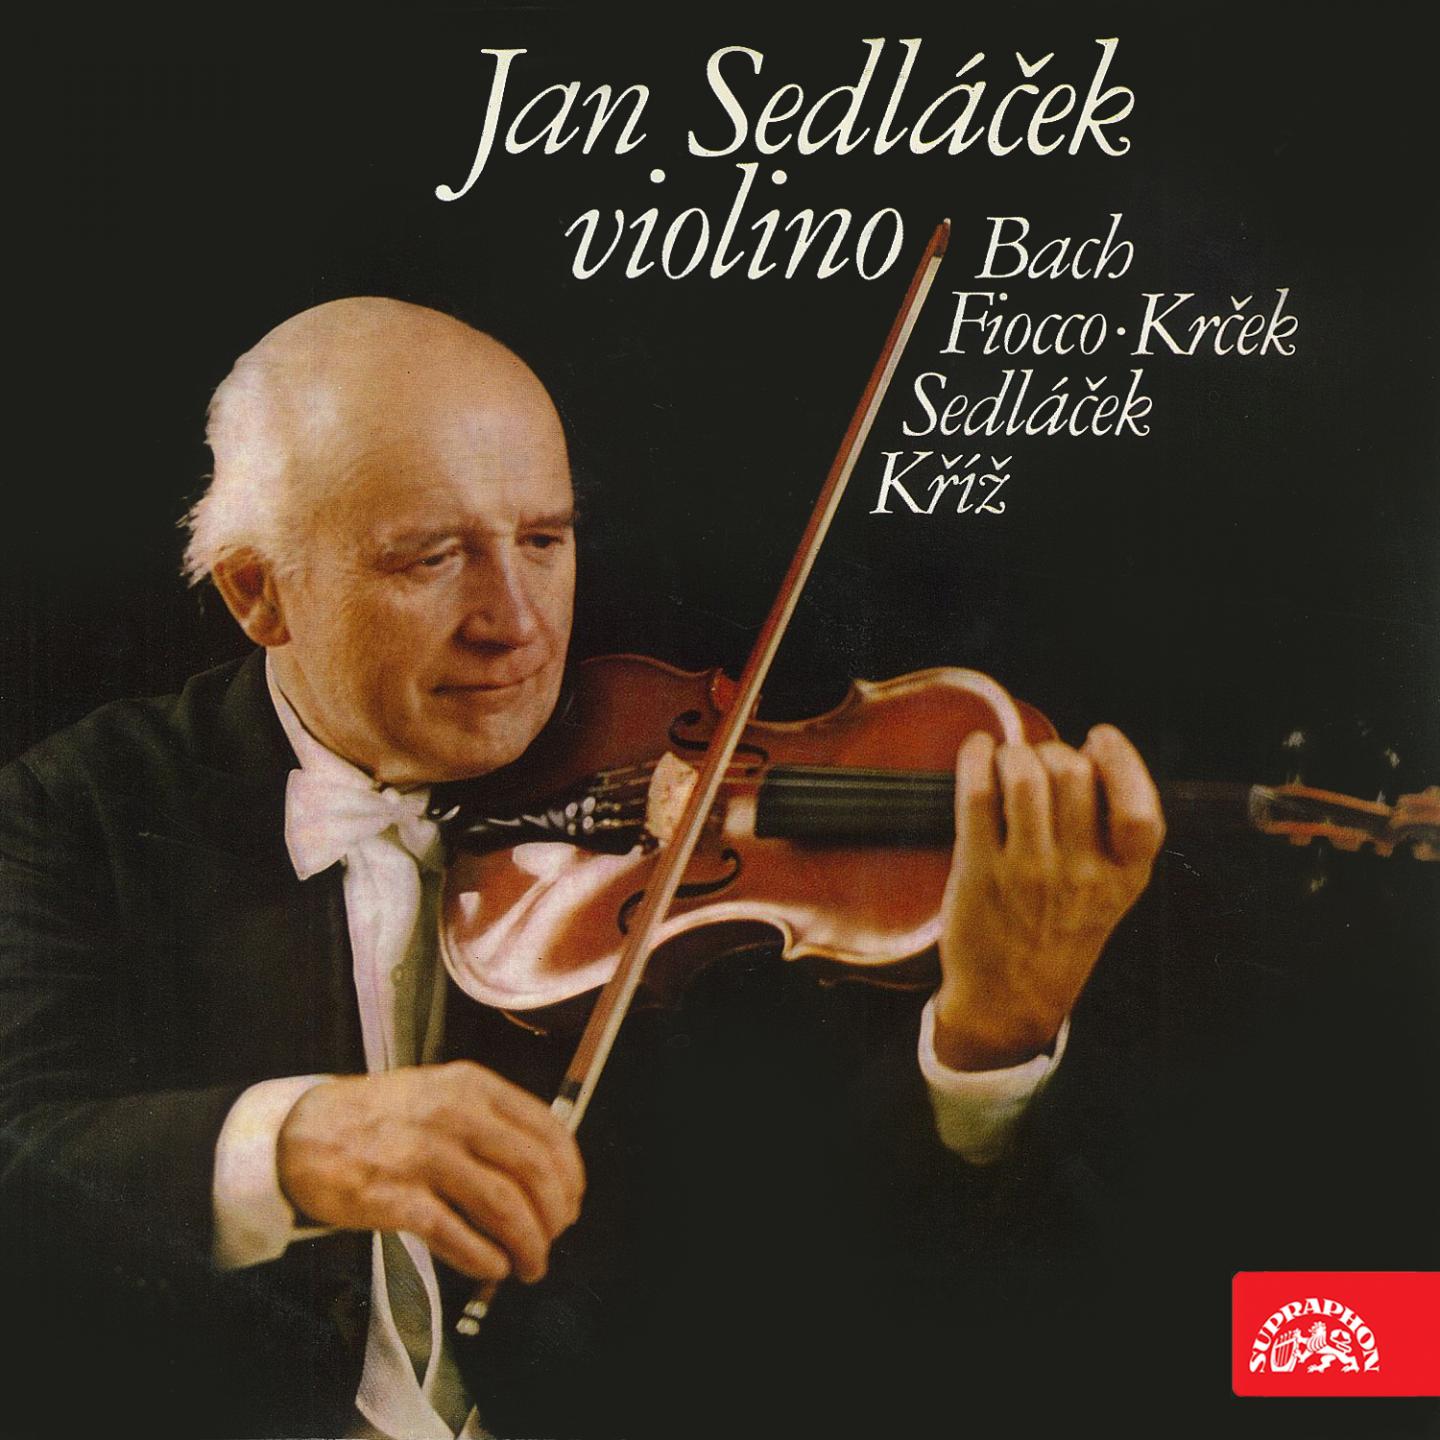 Violino  Bach, Fiocco, Kr ek, Sedla ek, Ki